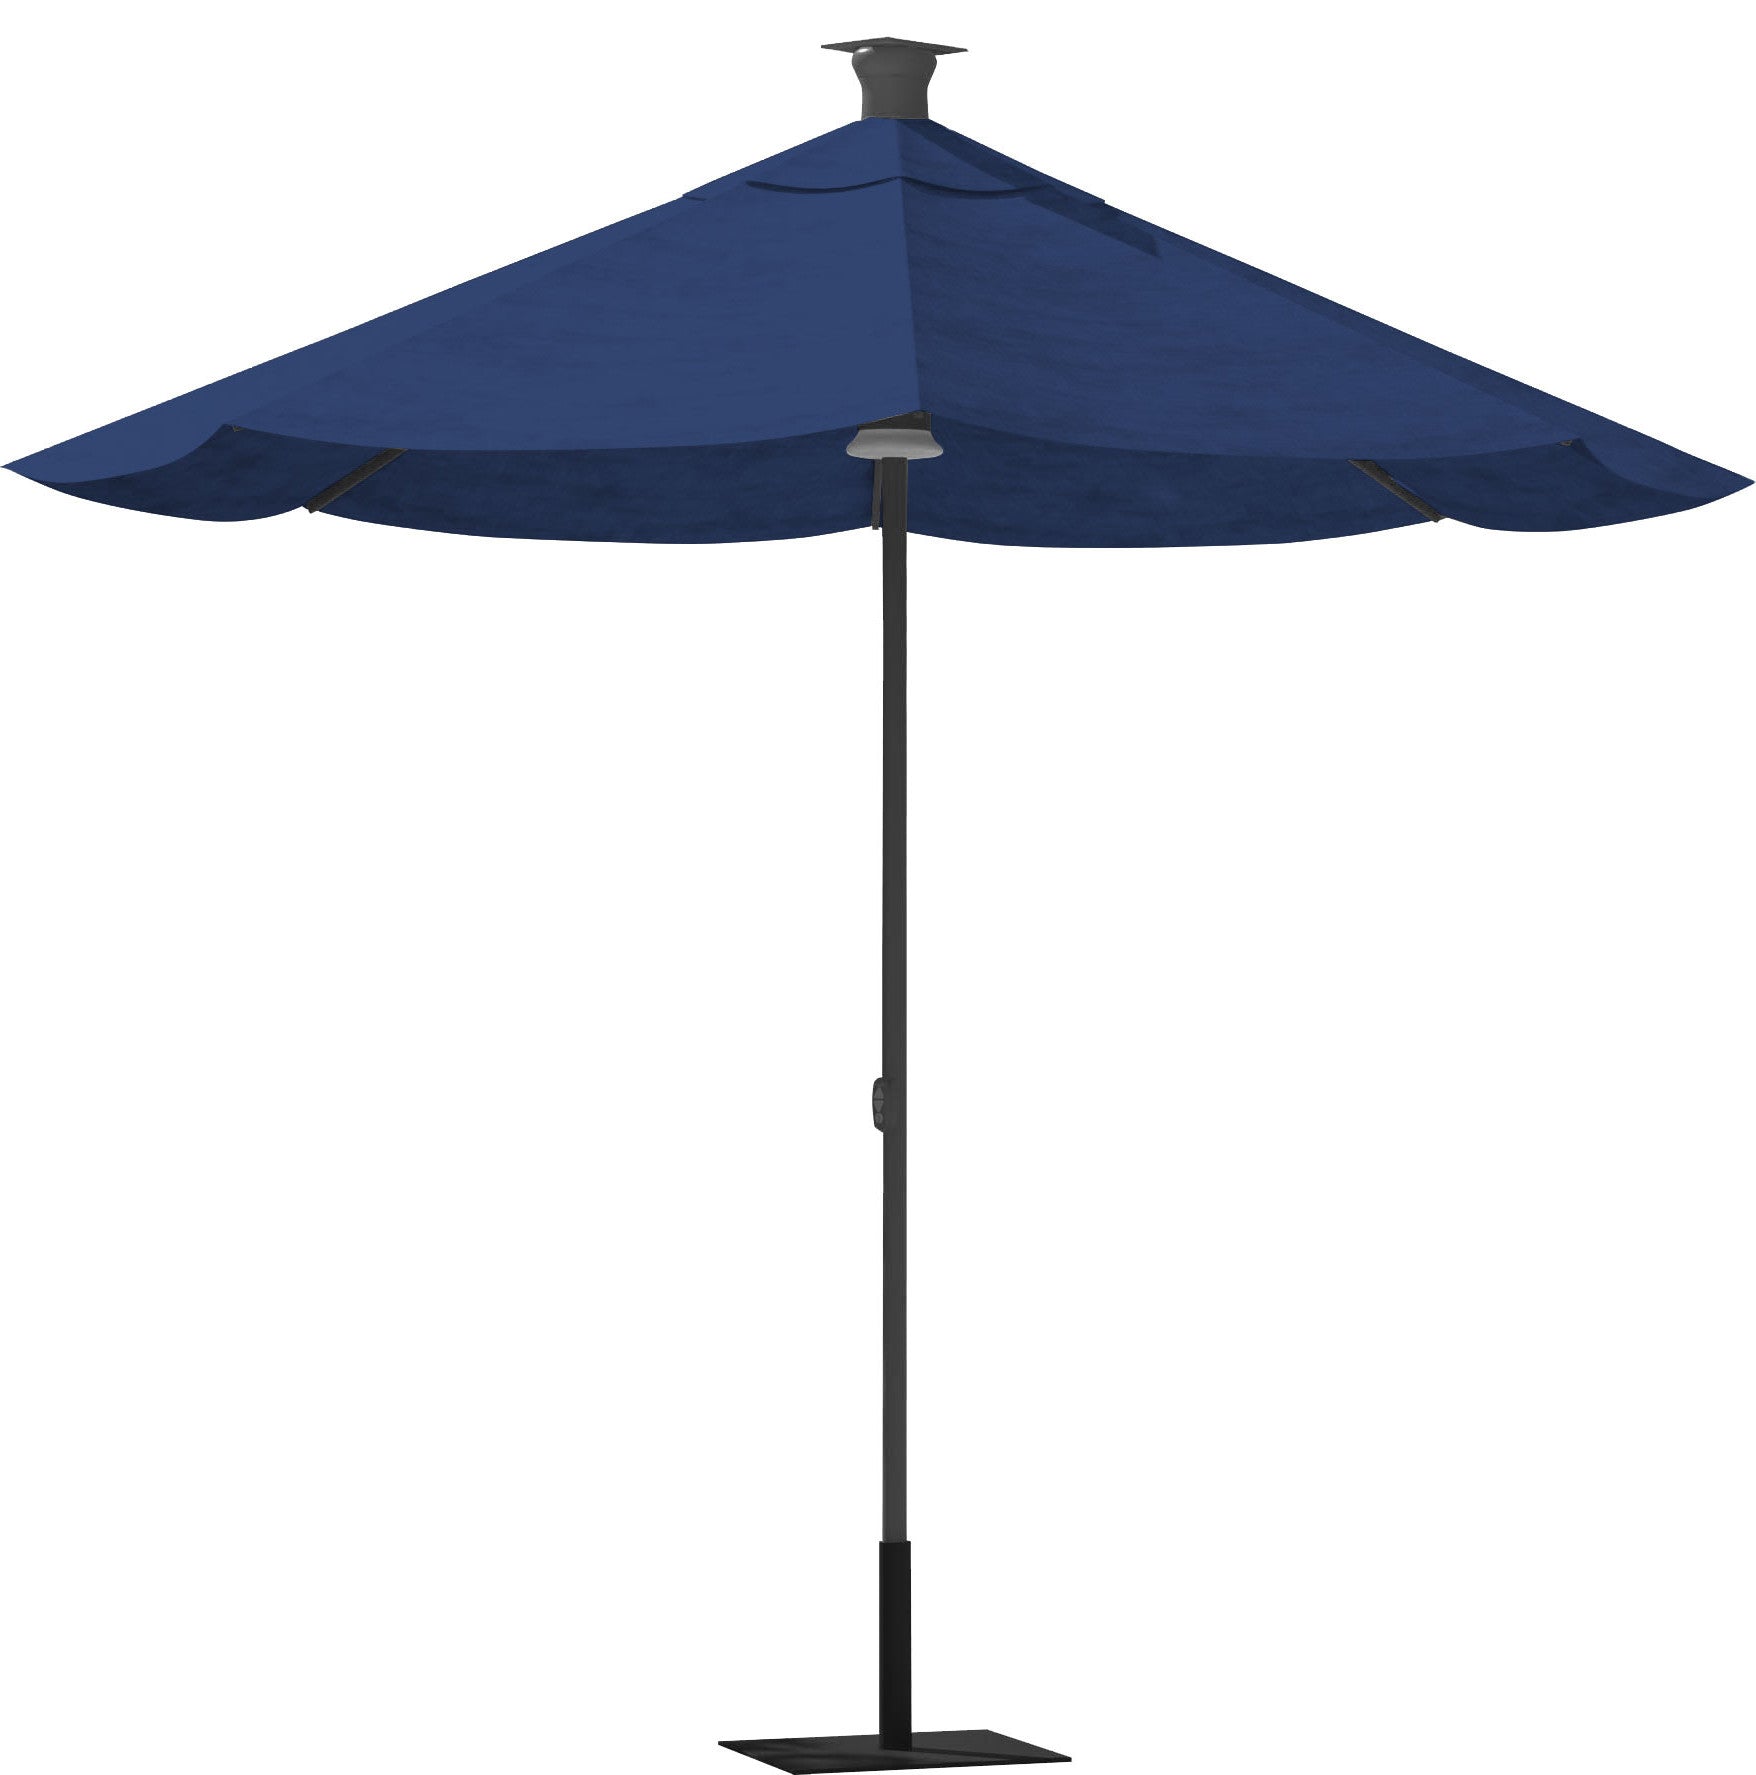 9' Blue Sunbrella Octagonal Lighted Market Patio Umbrella with USB and Solar